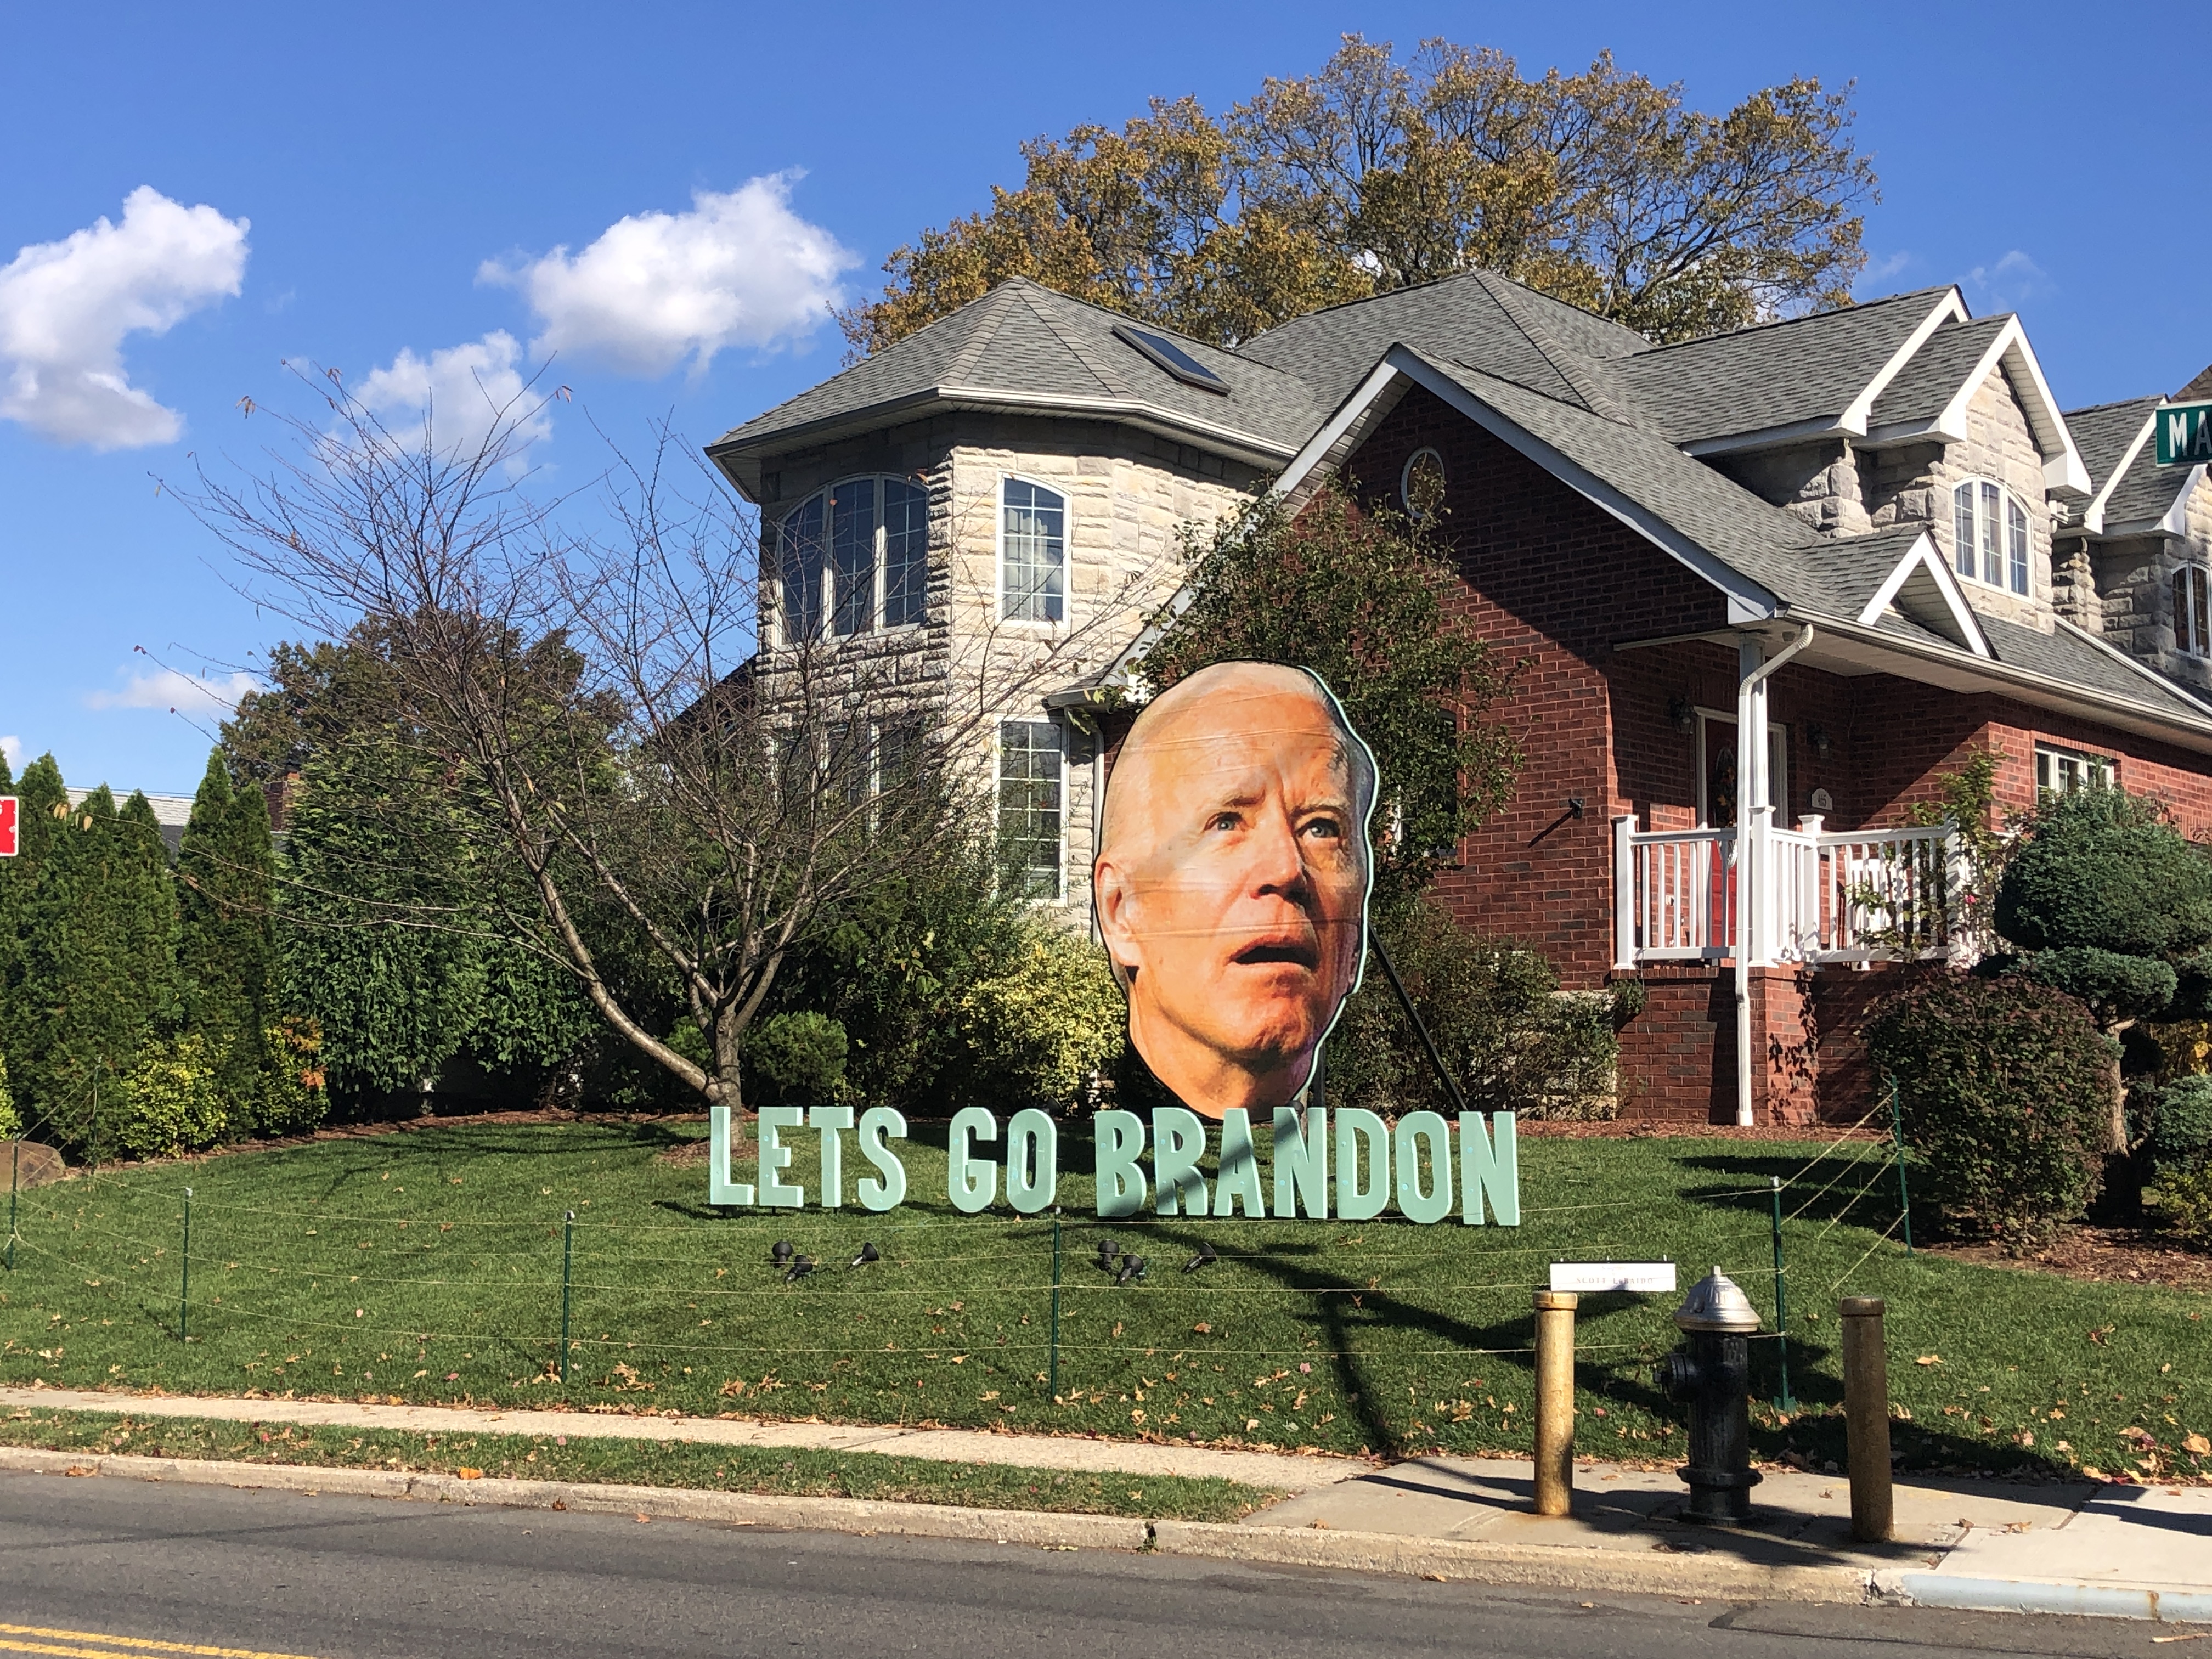 Large Biden 'Let's go Brandon' lawn installation erected on Staten